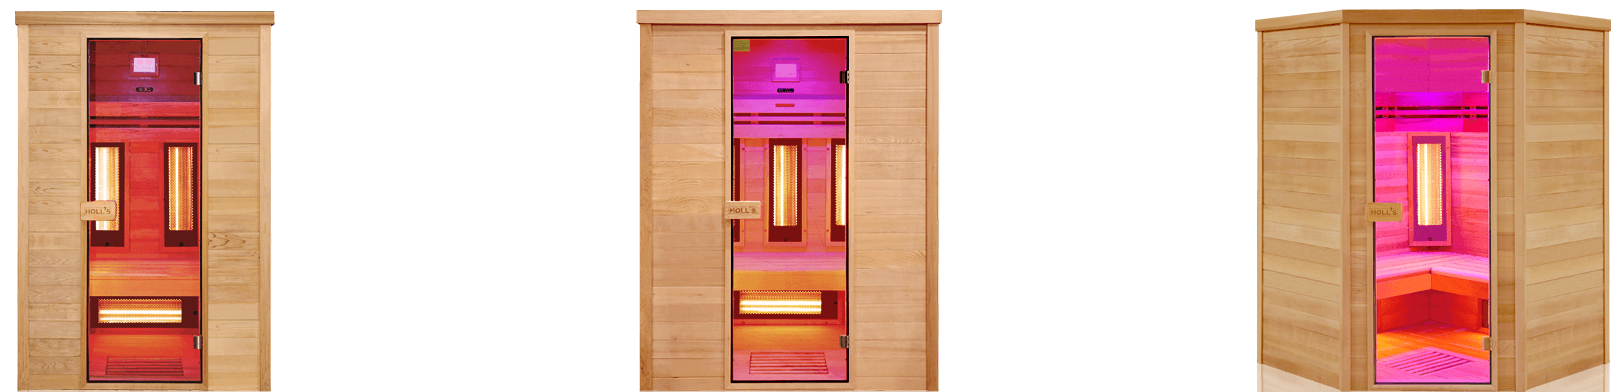 La gamme MultiWave de saunas infrarouges de Poolstar